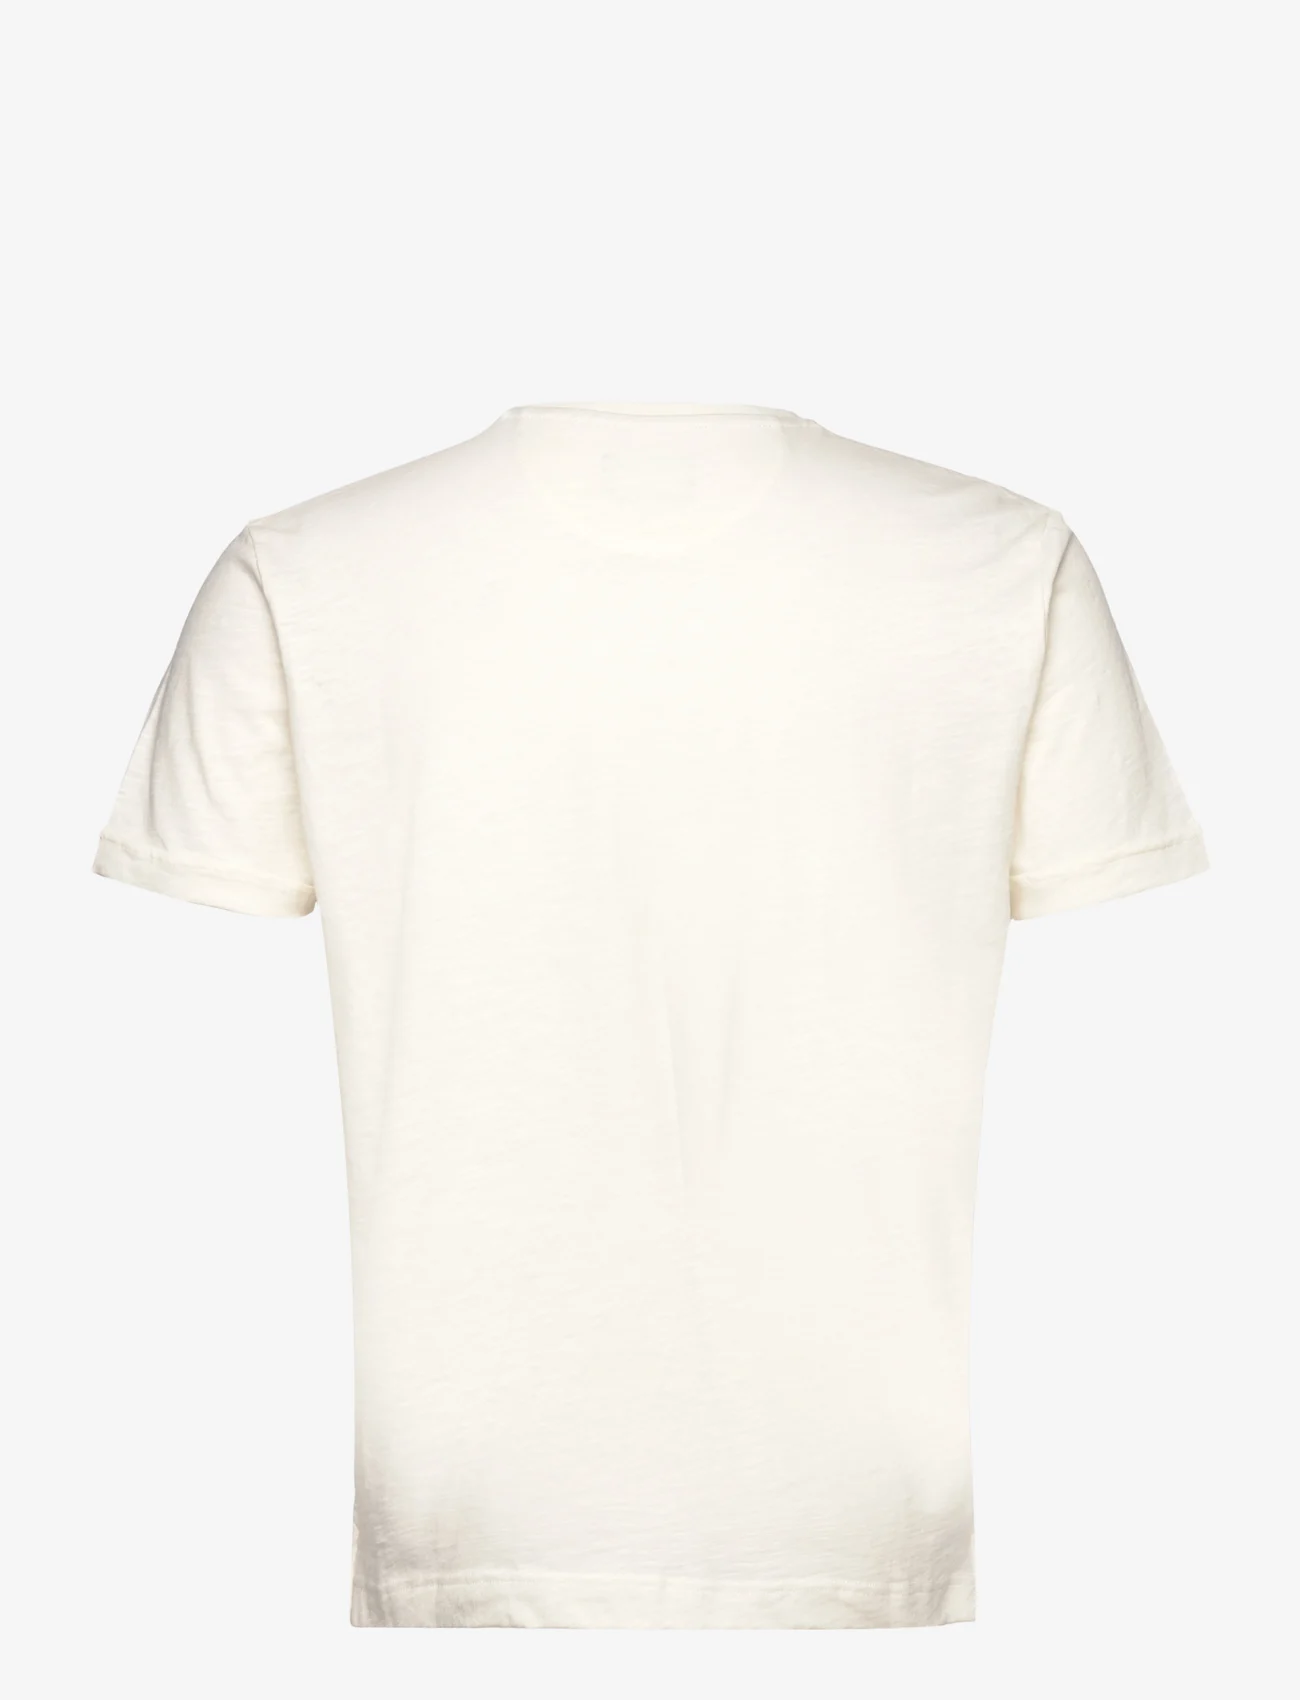 Hackett London - CTN LINEN POCKET TEE - laisvalaikio marškinėliai - off white - 1